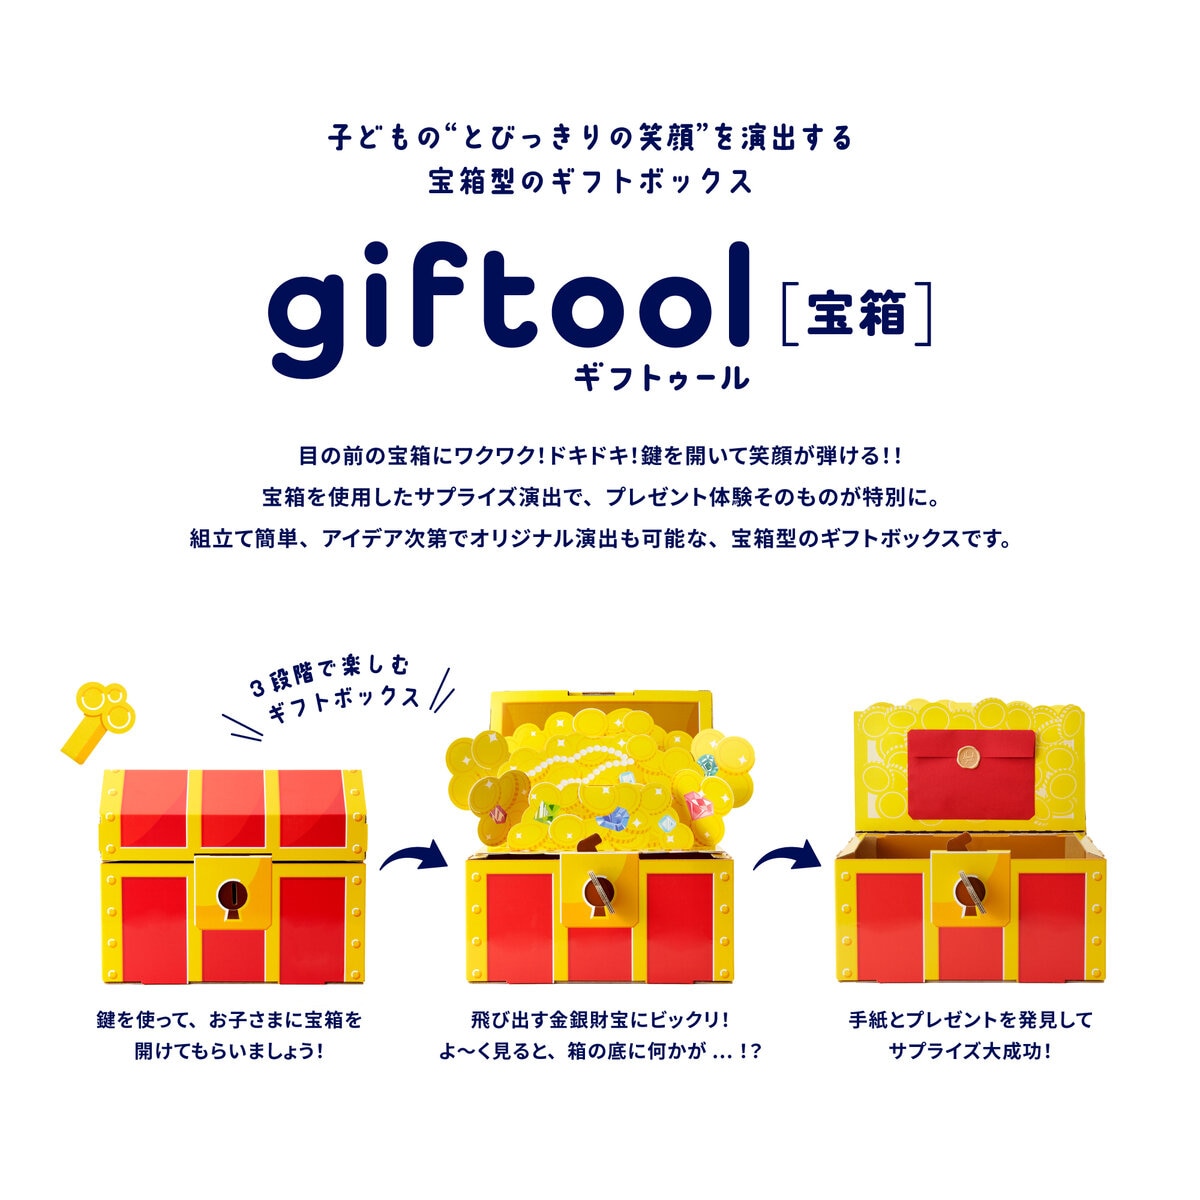 giftool 宝箱 金銀財宝 Sサイズ x 10